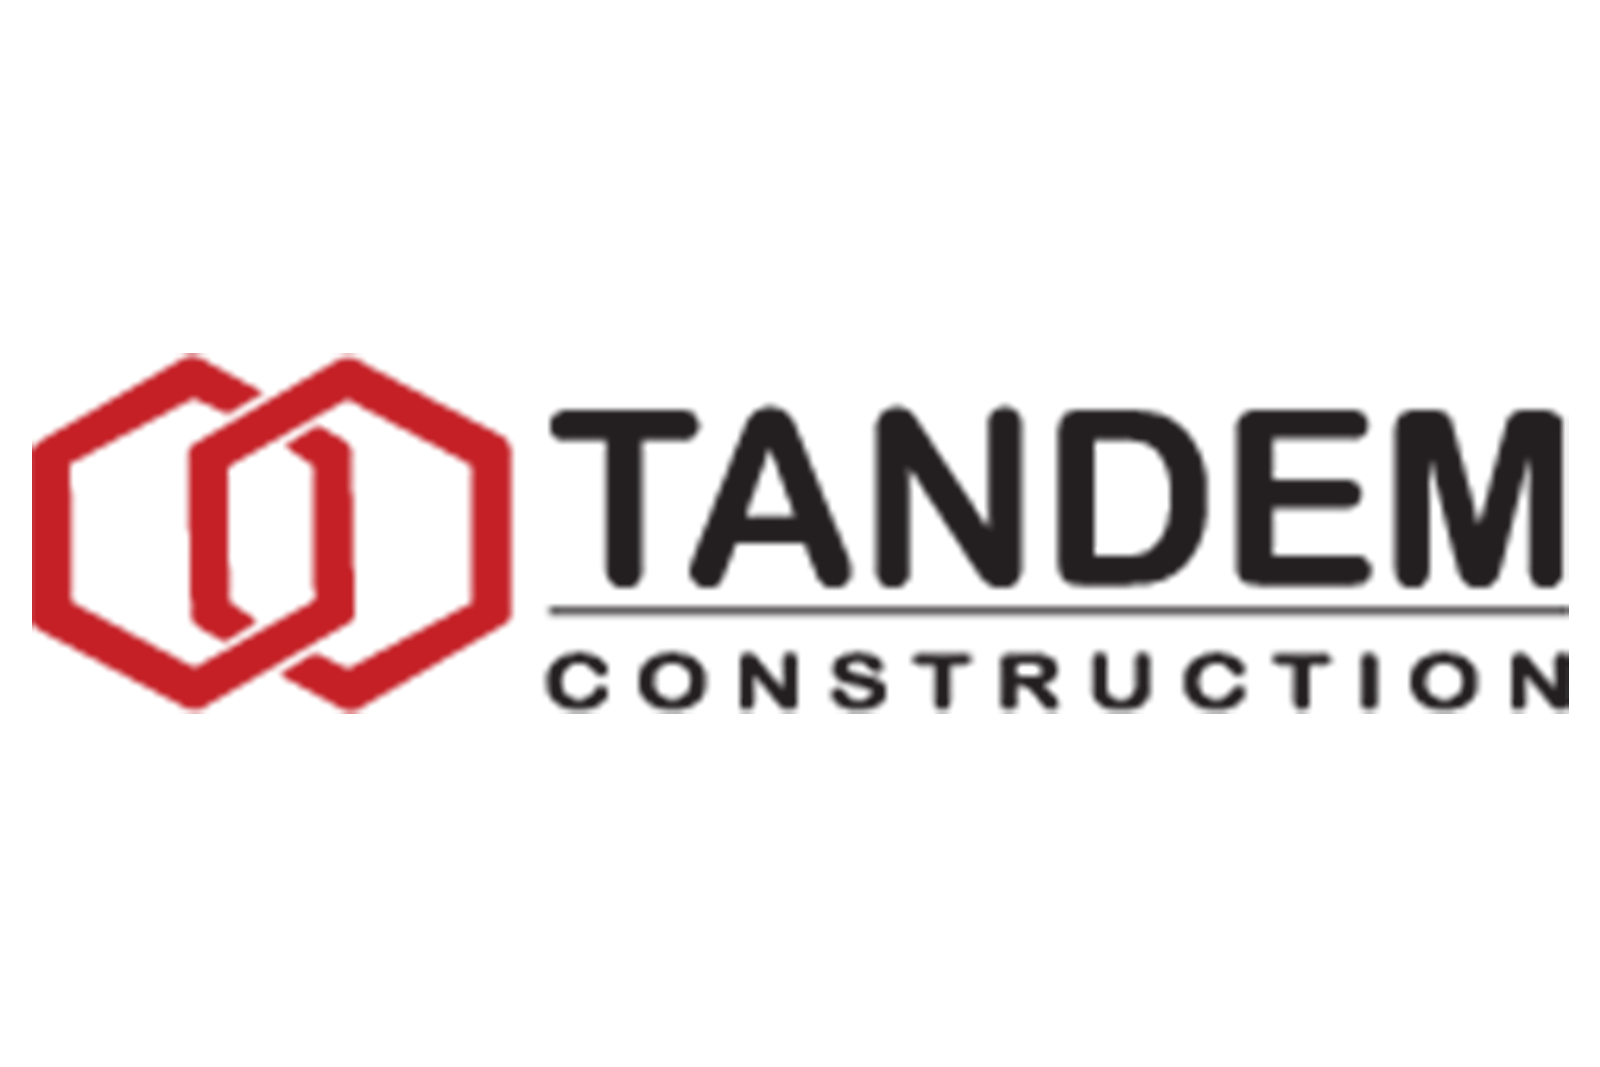 Tandem Construction